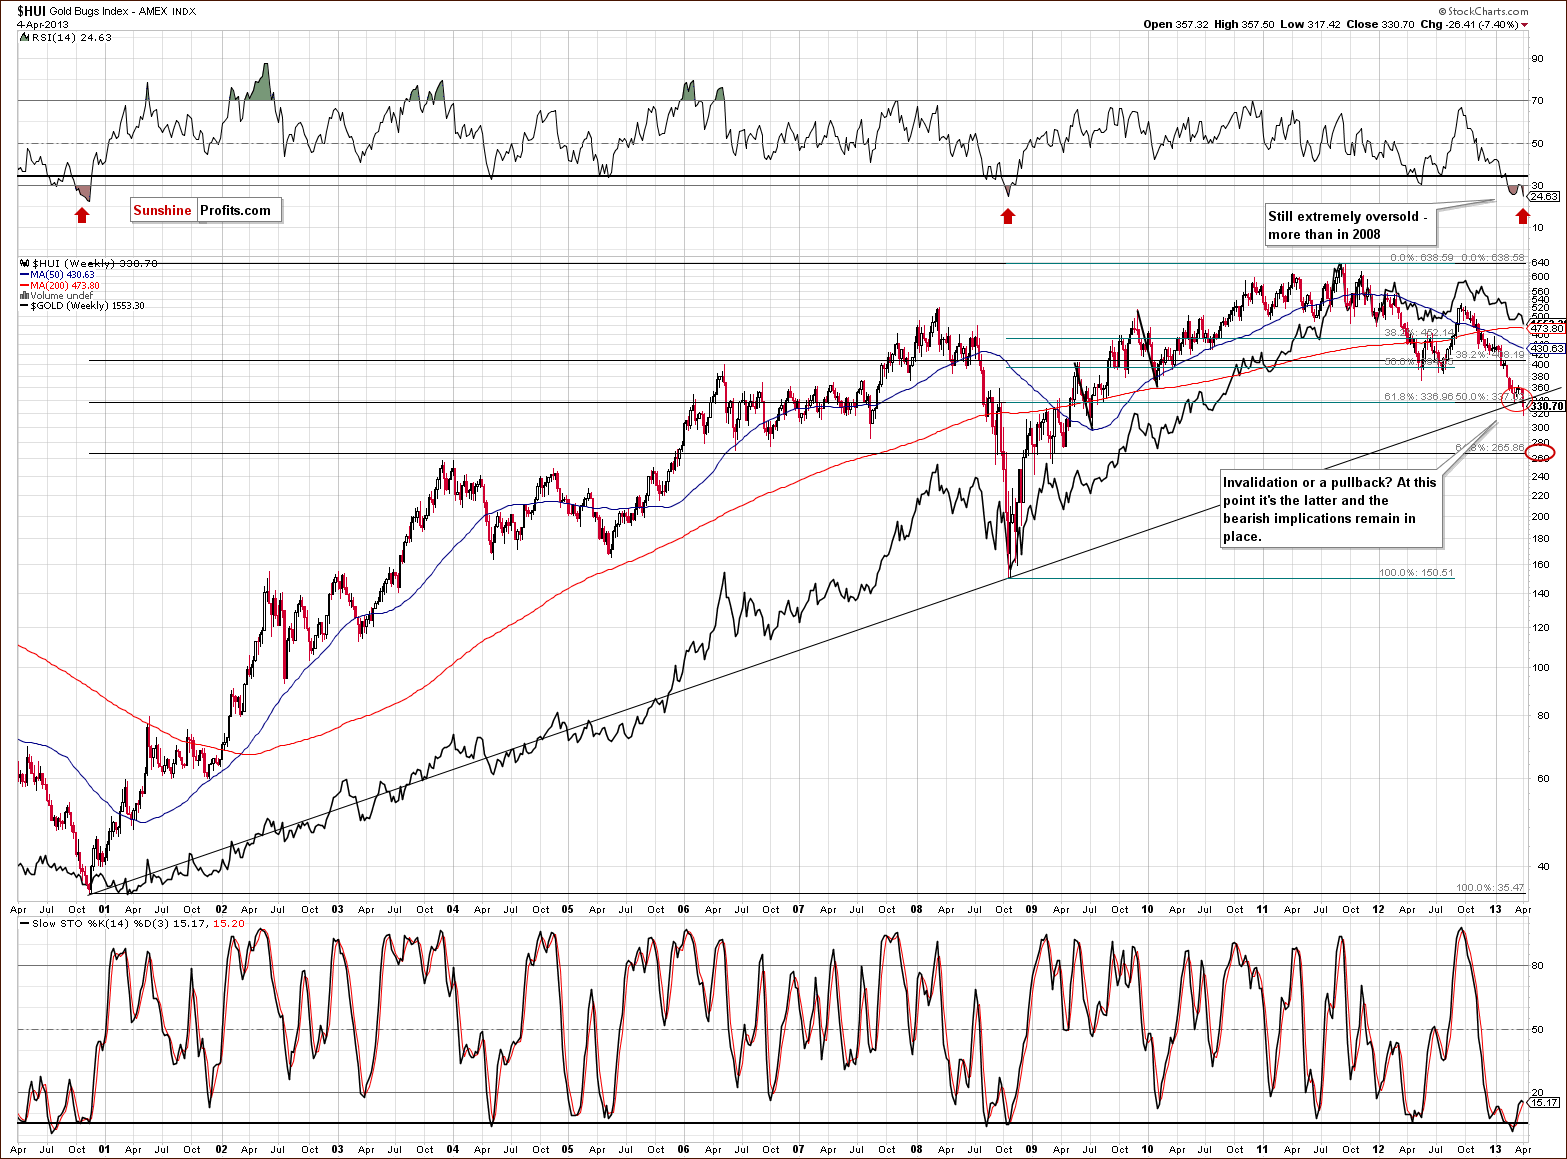 Very long-term HUI Index chart - Gold Bugs, Mining stocks